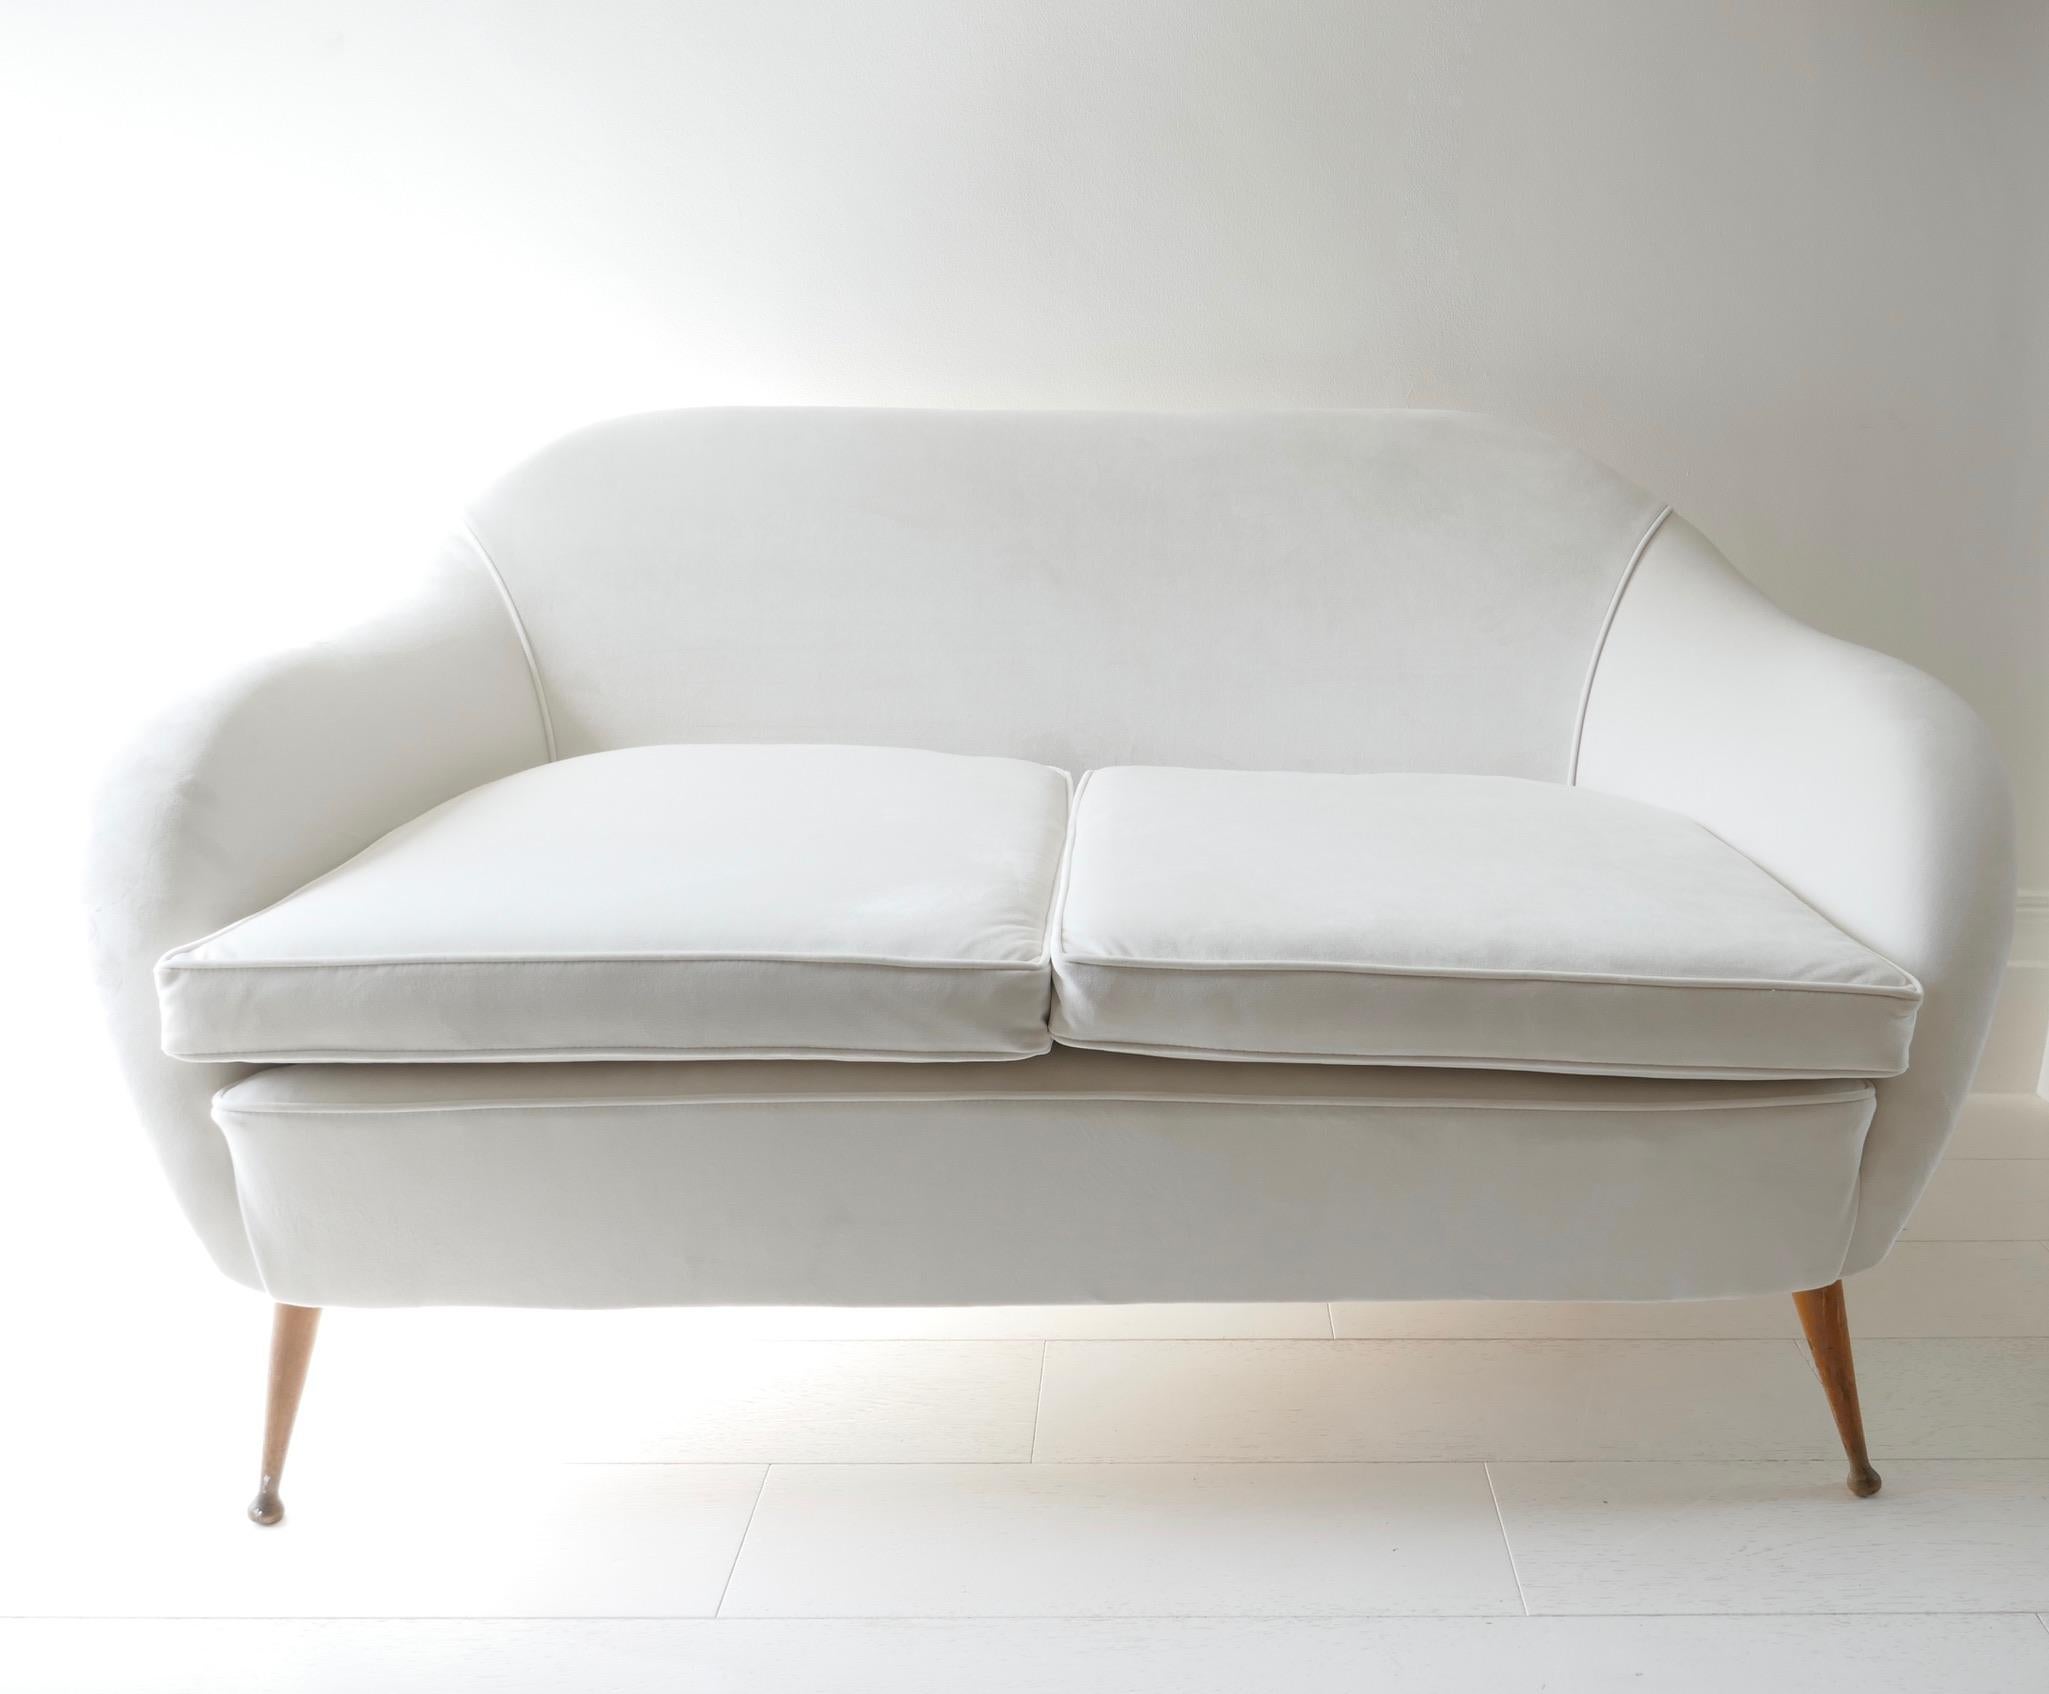 Italian two seat sofa, 1950s, reupholstered in white velvet with wooden legs.